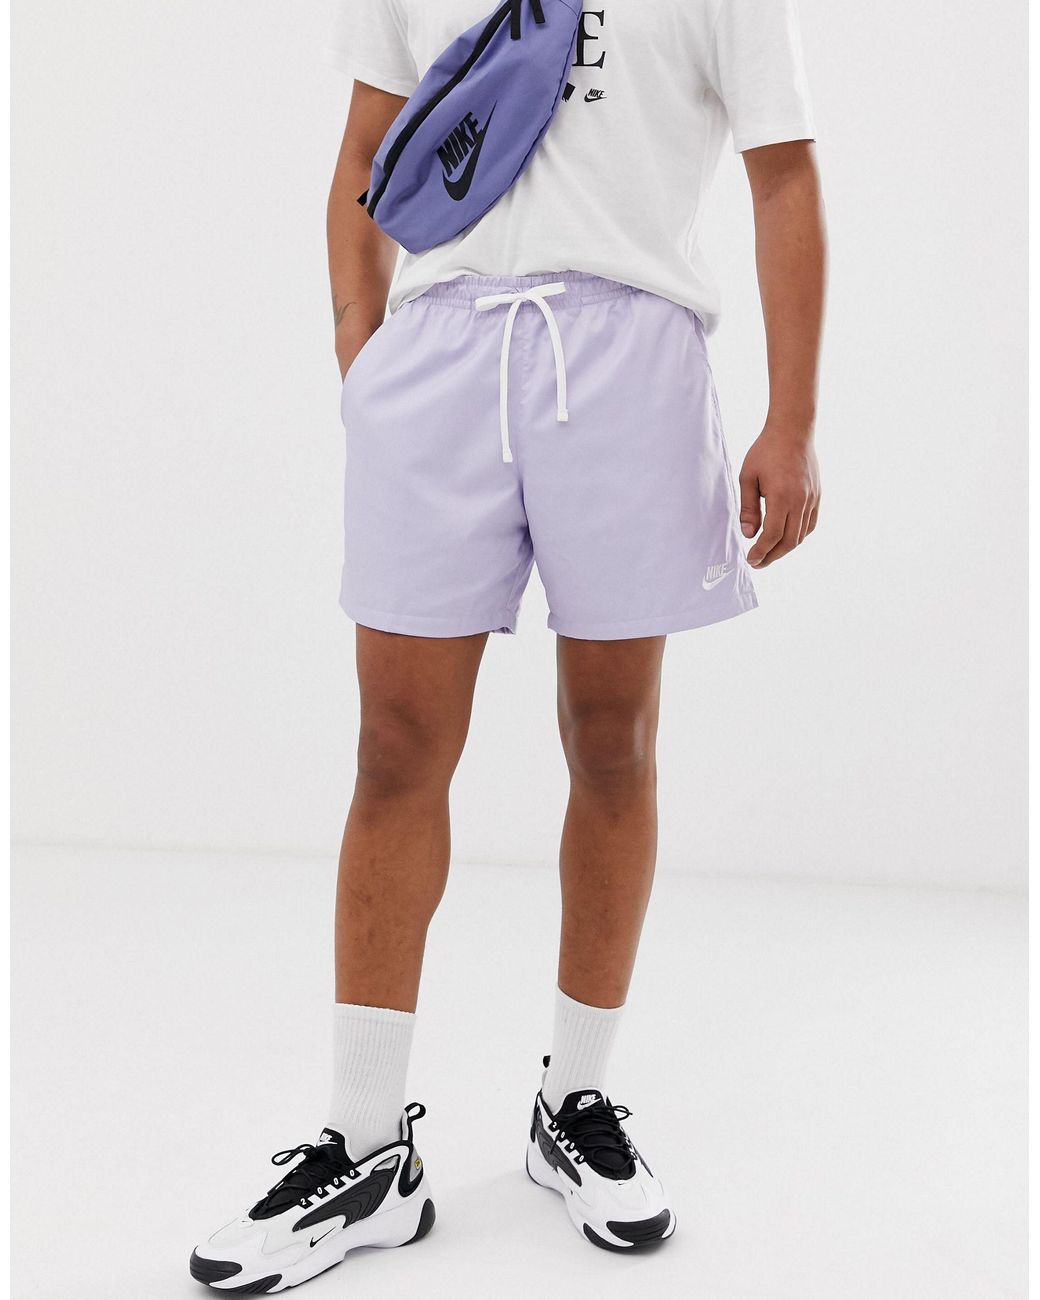 Purple Nike Shorts | vlr.eng.br